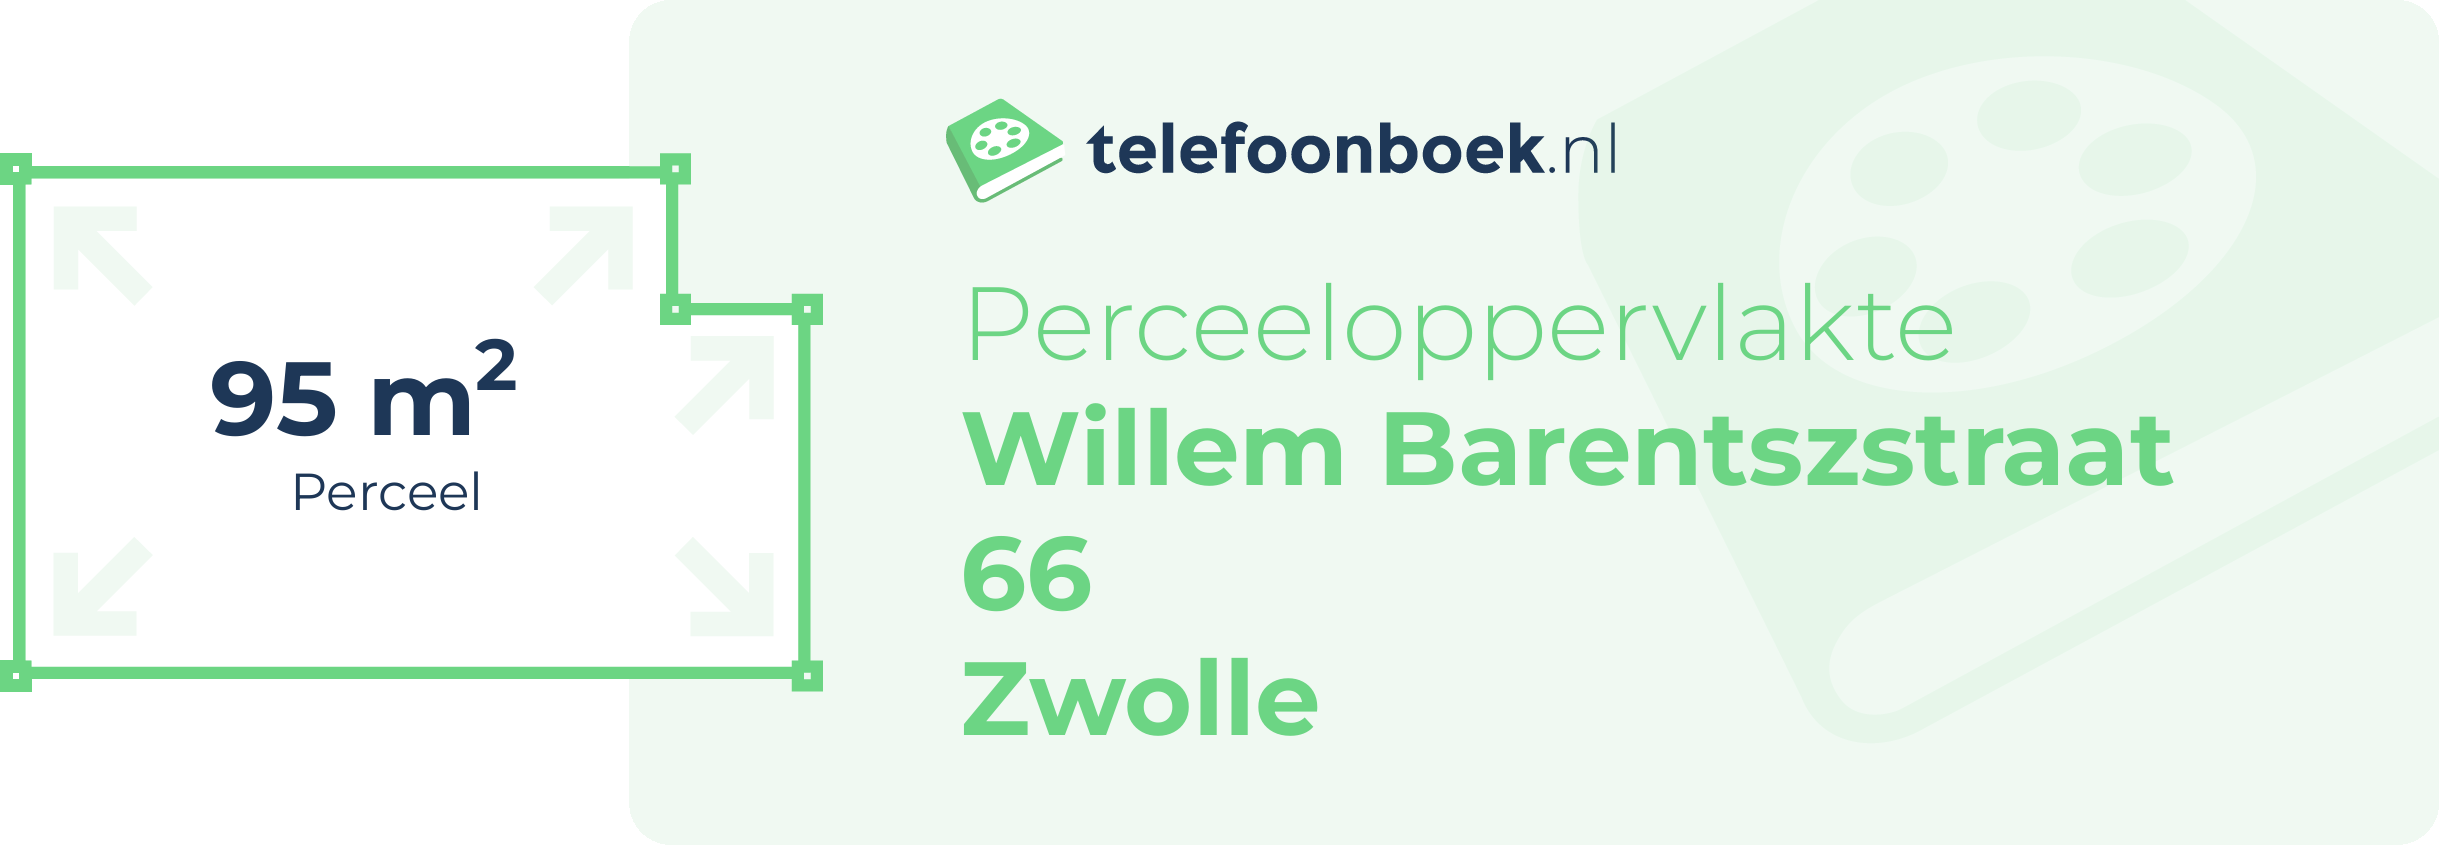 Perceeloppervlakte Willem Barentszstraat 66 Zwolle